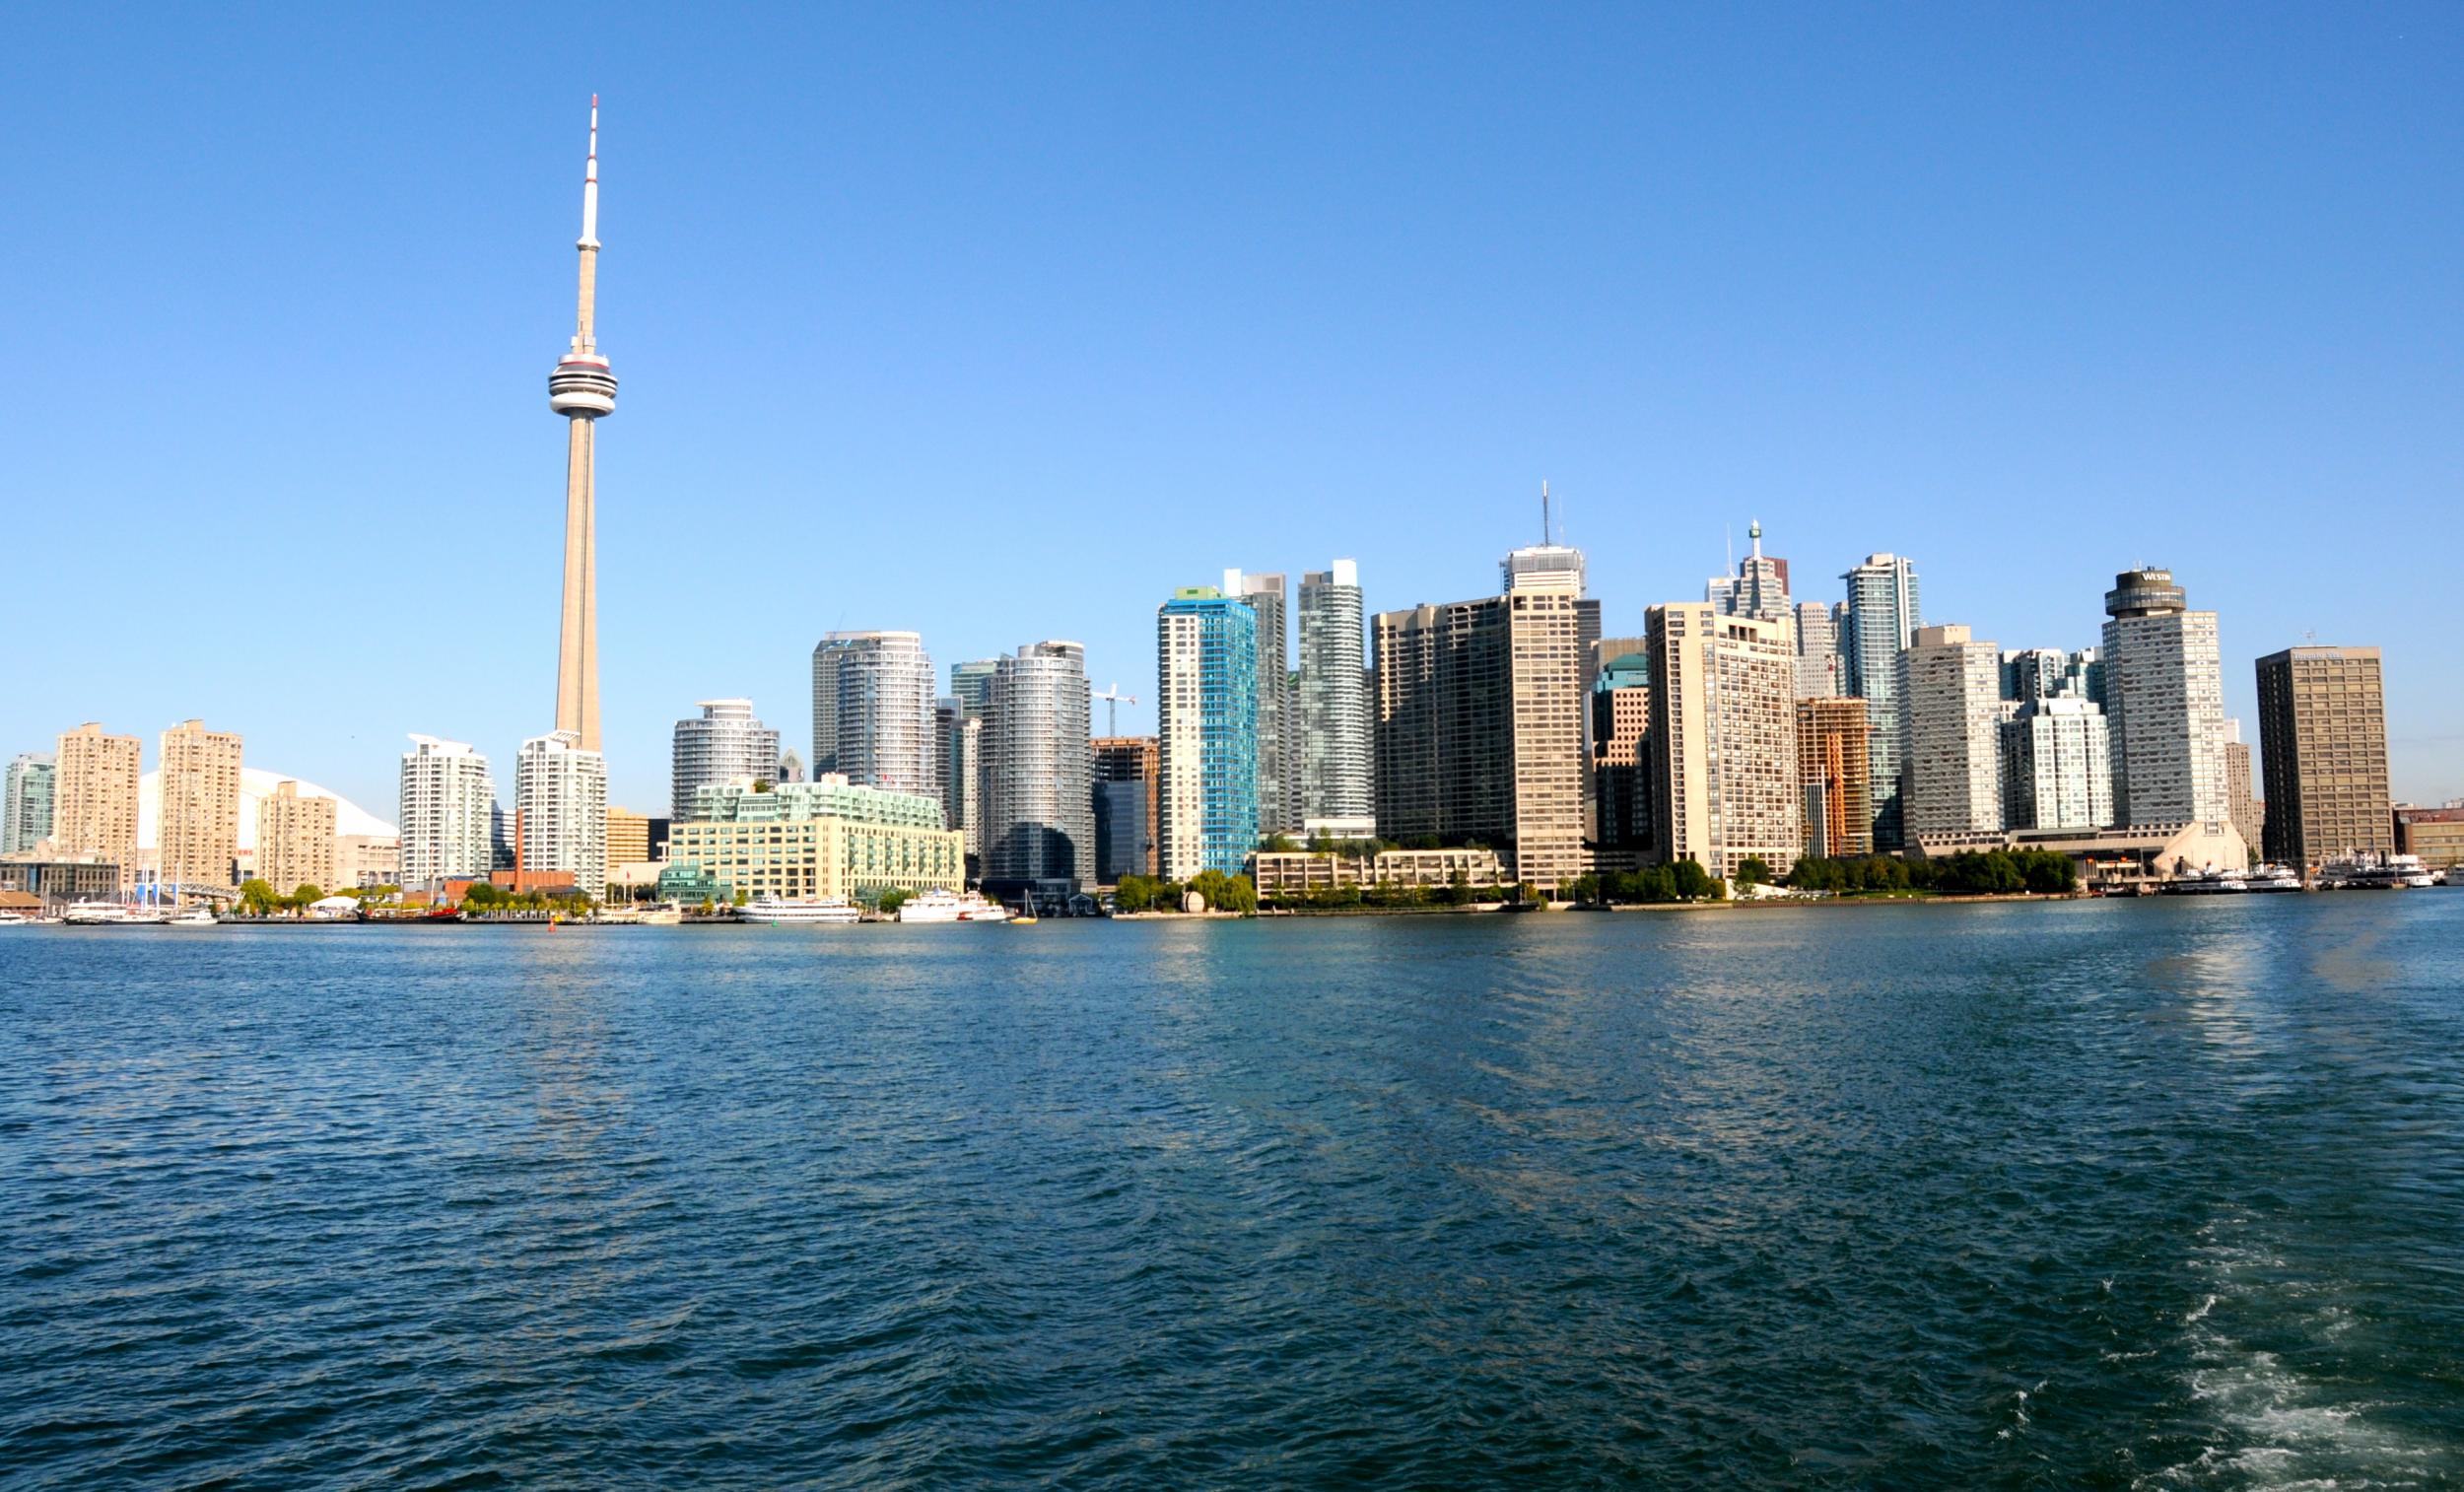 Exploring Canada balances city and outdoor adventures